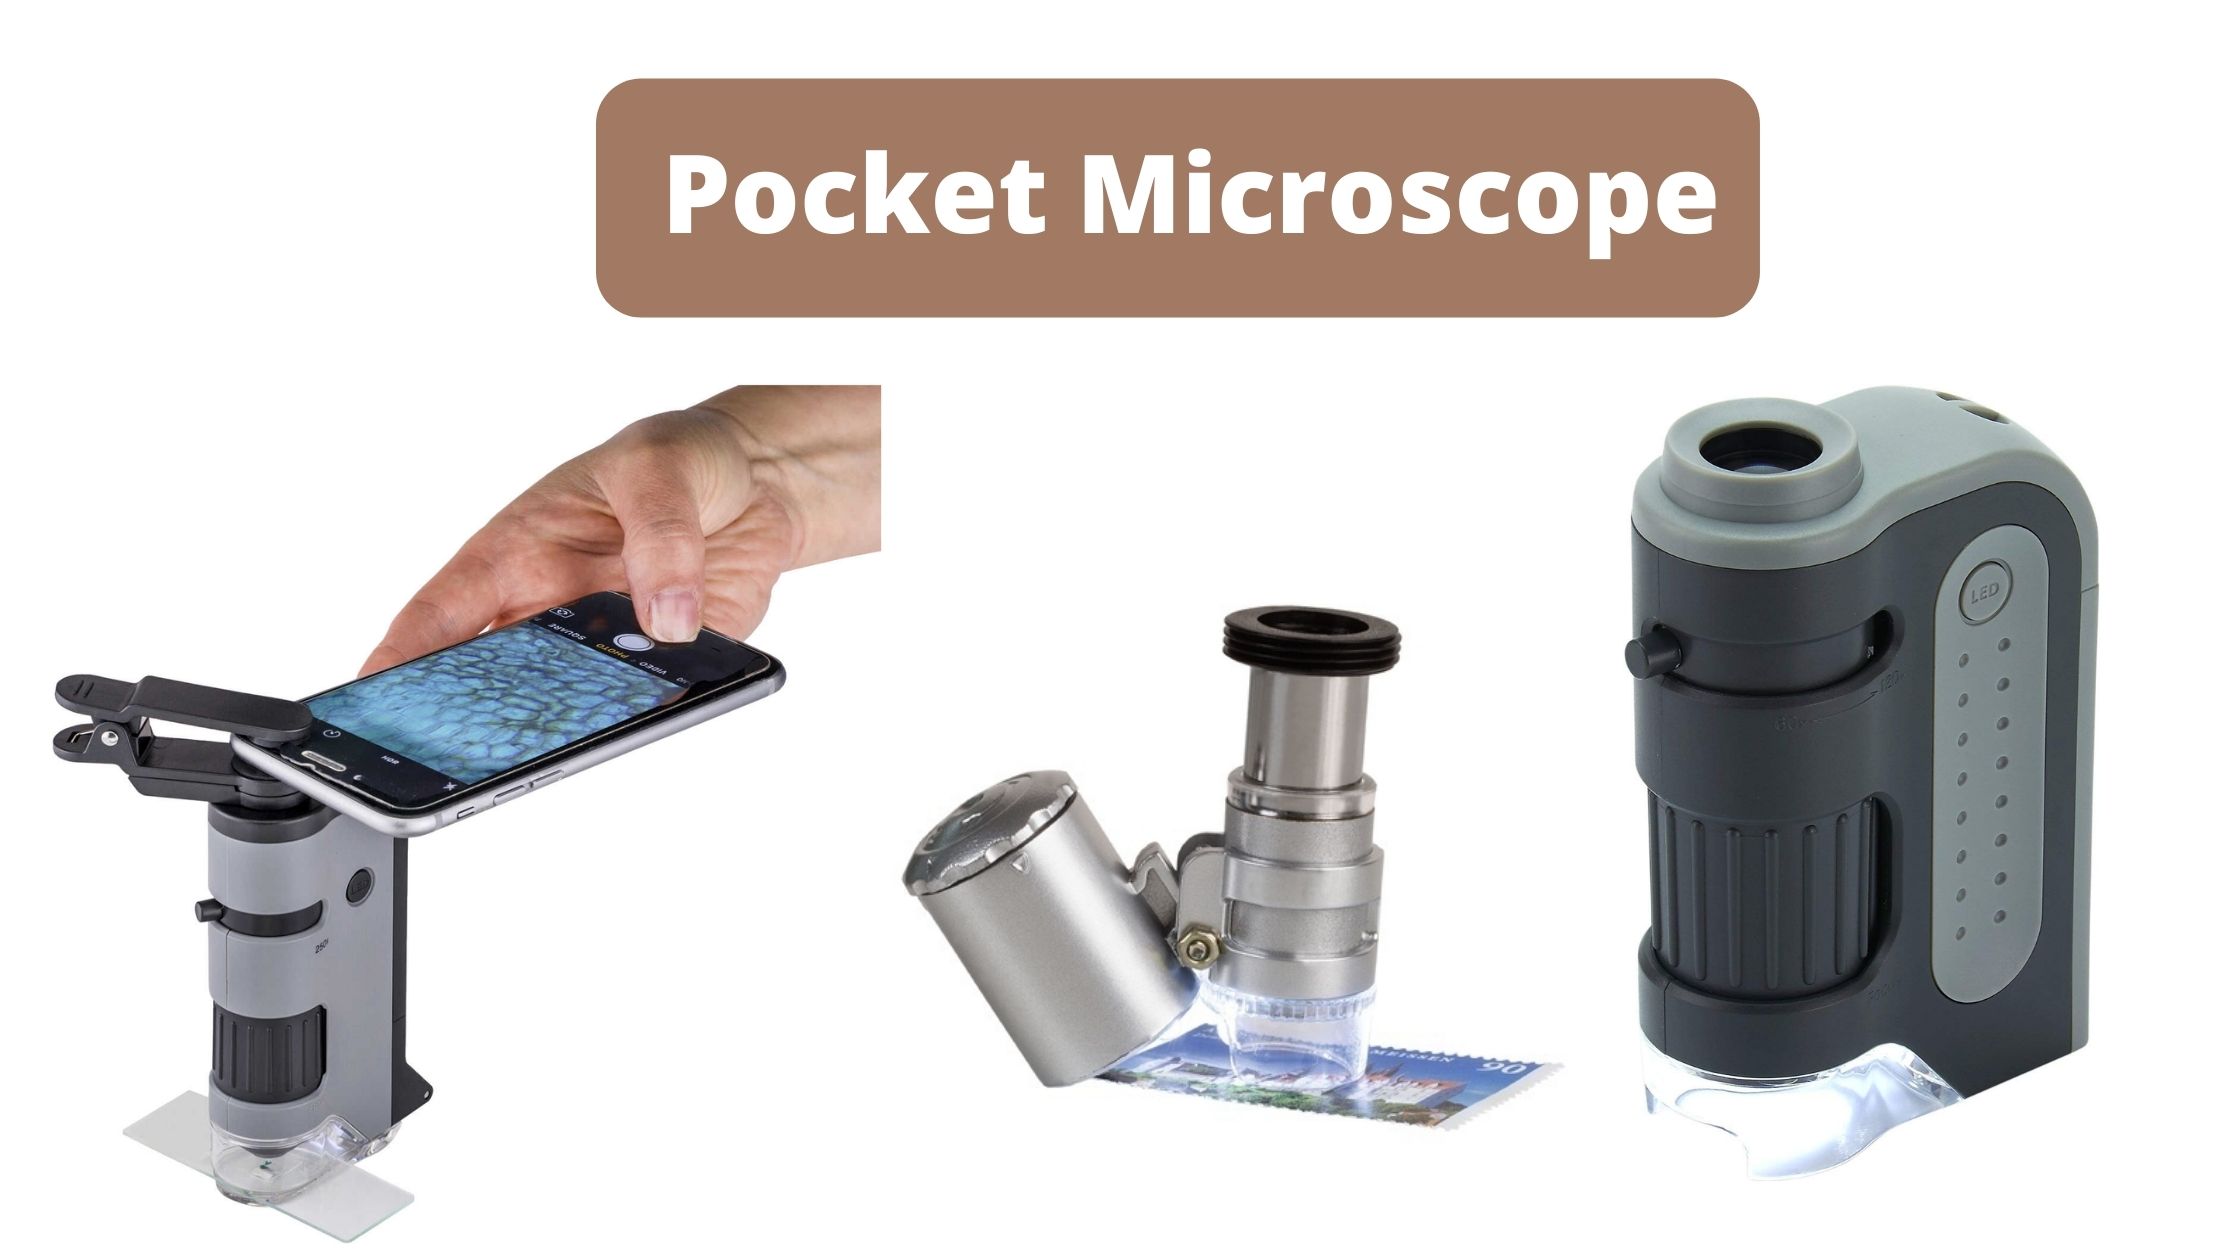 Pocket Microscope Definition, Principle, Application